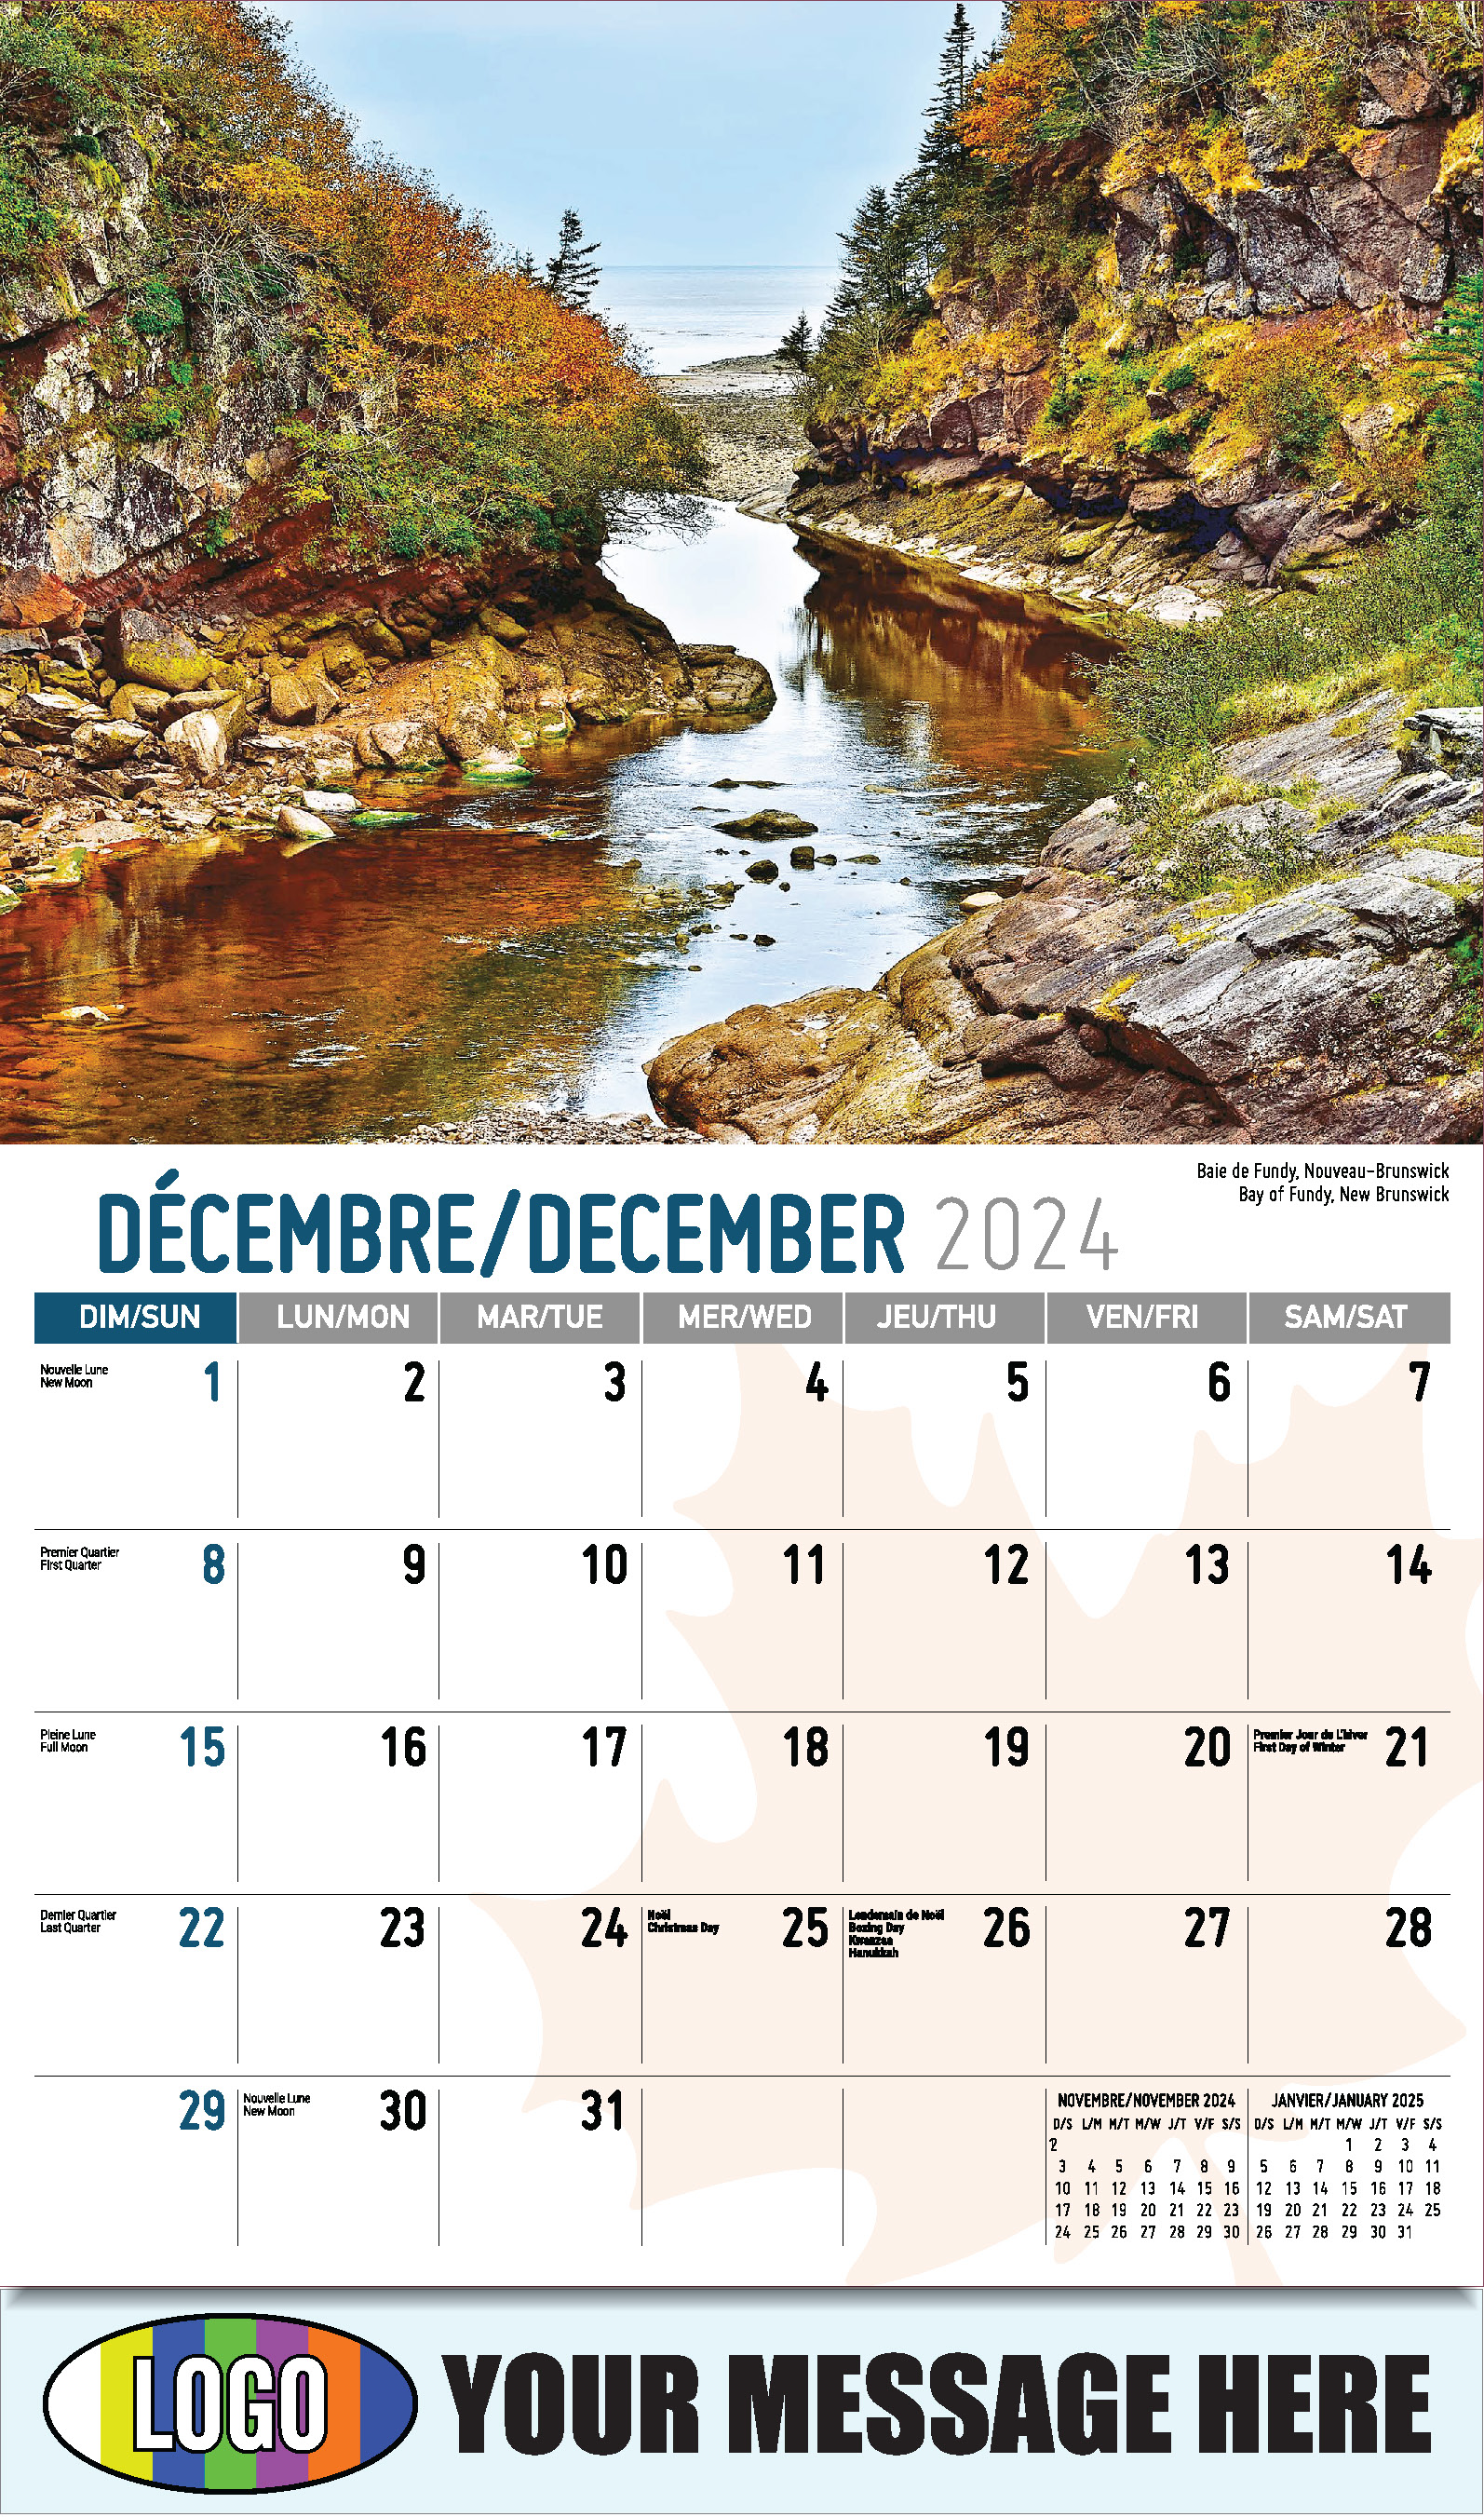 Scenes of Canada 2025 Bilingual Business Advertising Calendar - December_a